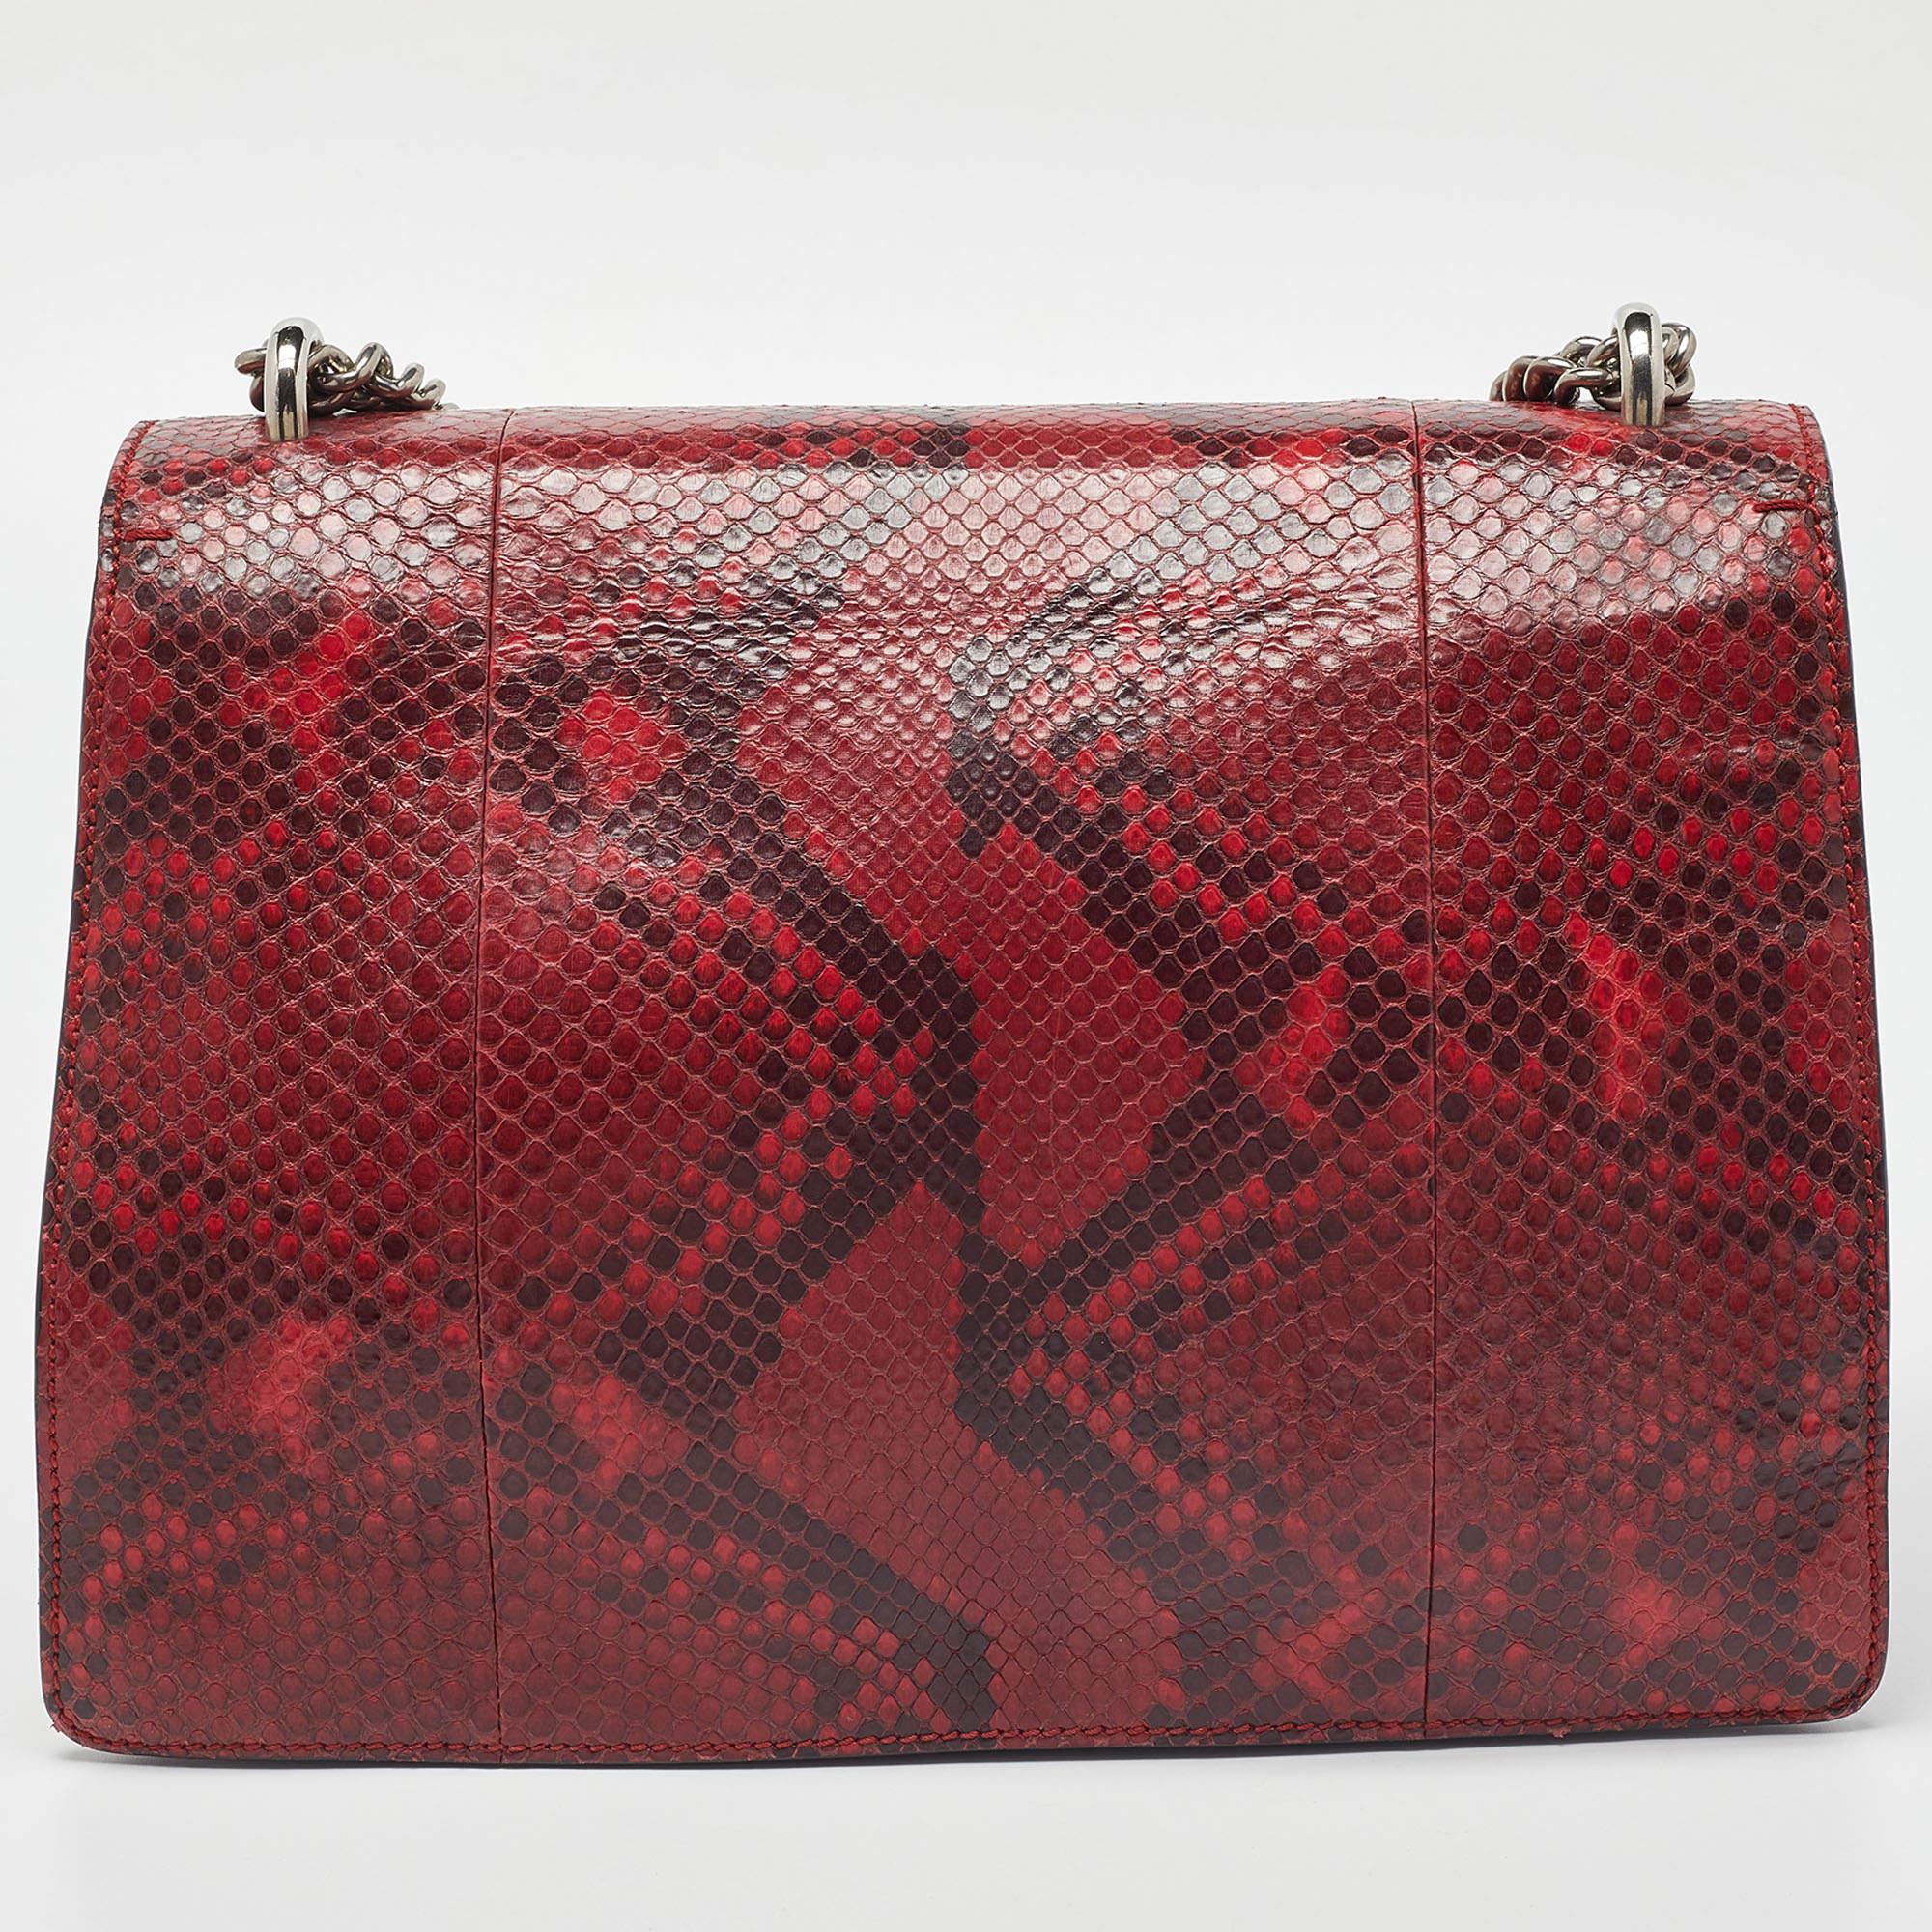 Gucci Red/Black Python Medium Dionysus Shoulder Bag In Good Condition For Sale In Dubai, Al Qouz 2